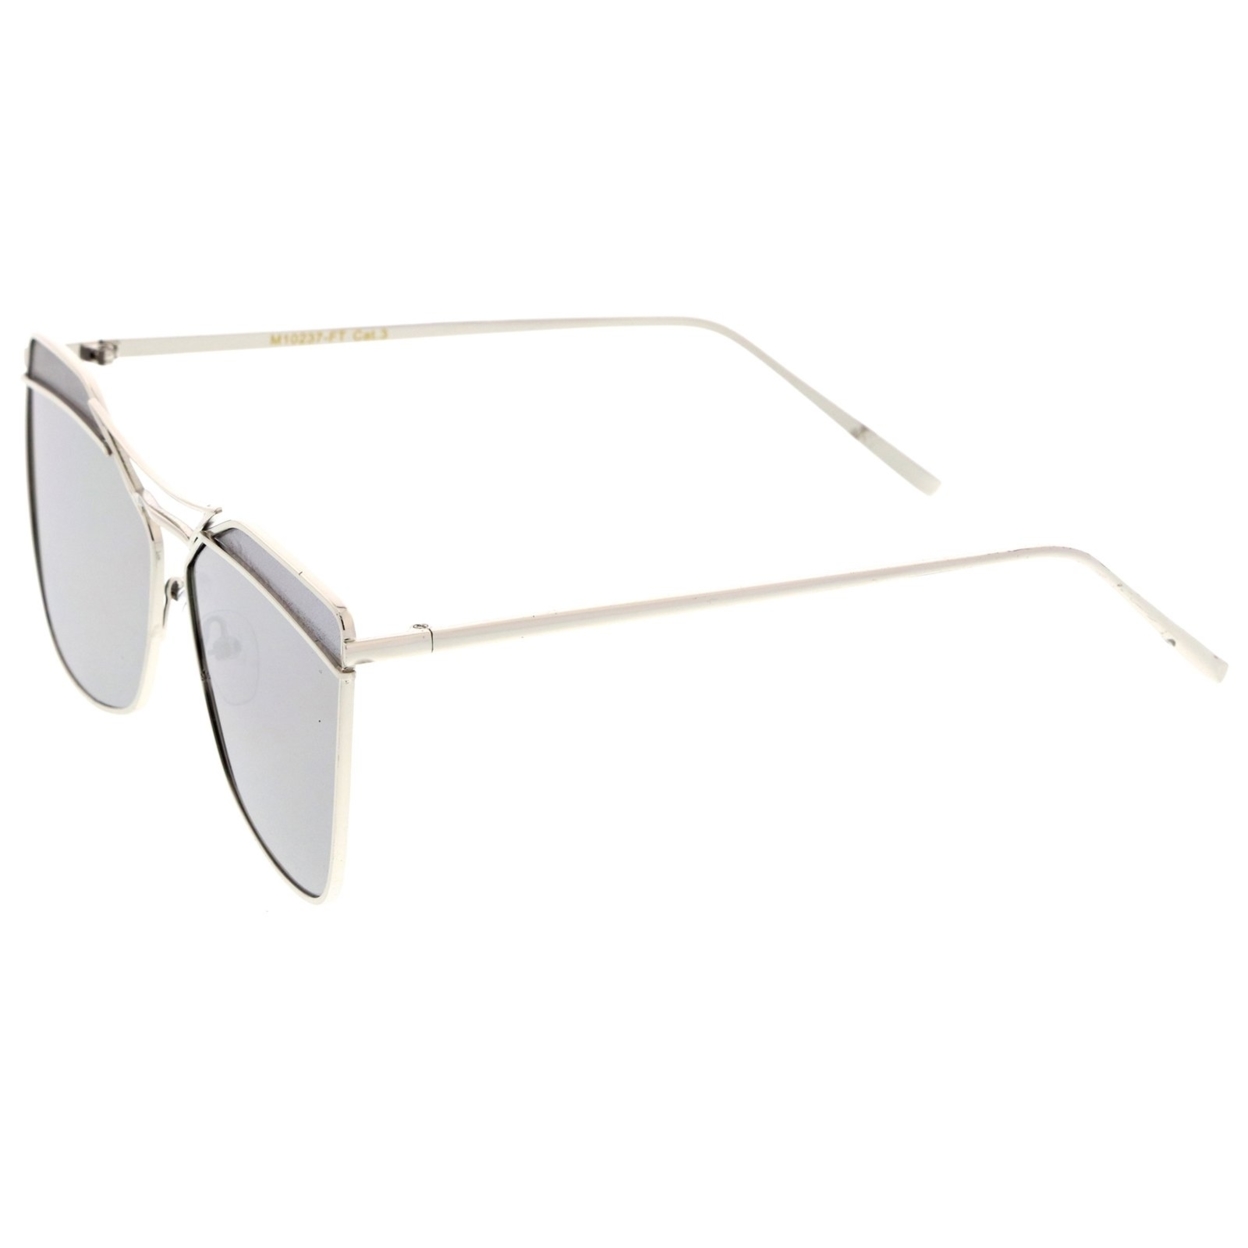 Modern Metal Double Nose Bridge Mirror Flat Lens Square Sunglasses 56mm - Silver / Blue Mirror